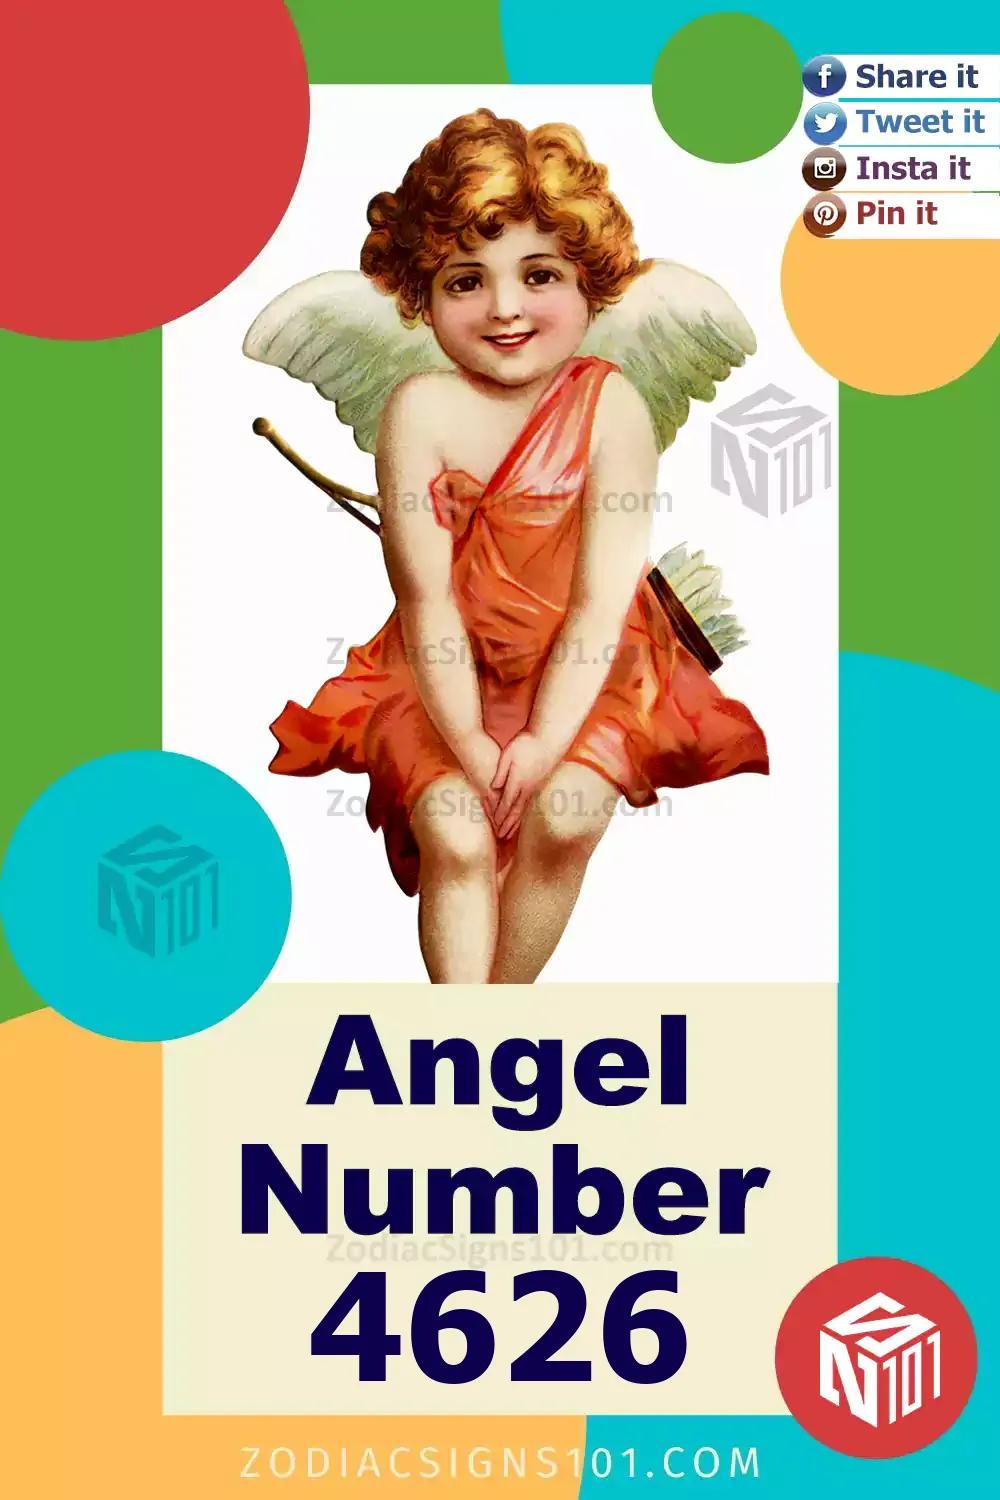 4626-Angel-Number-Meaning.jpg